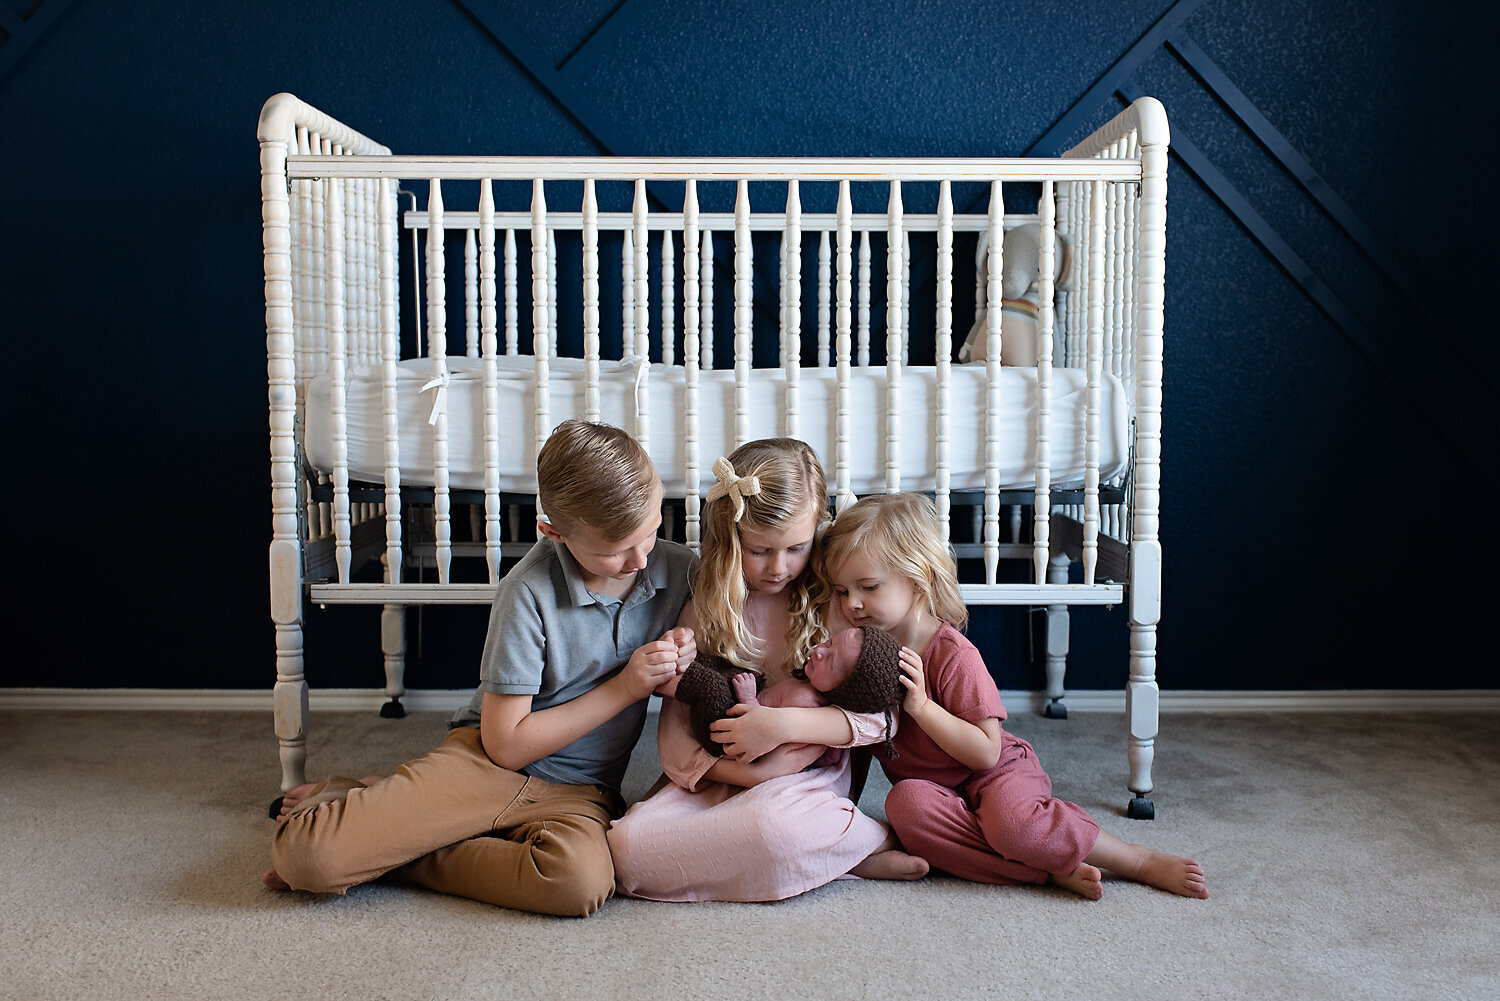 Three siblings cuddling their newborn brother while sitting on the floor of his nursery room.